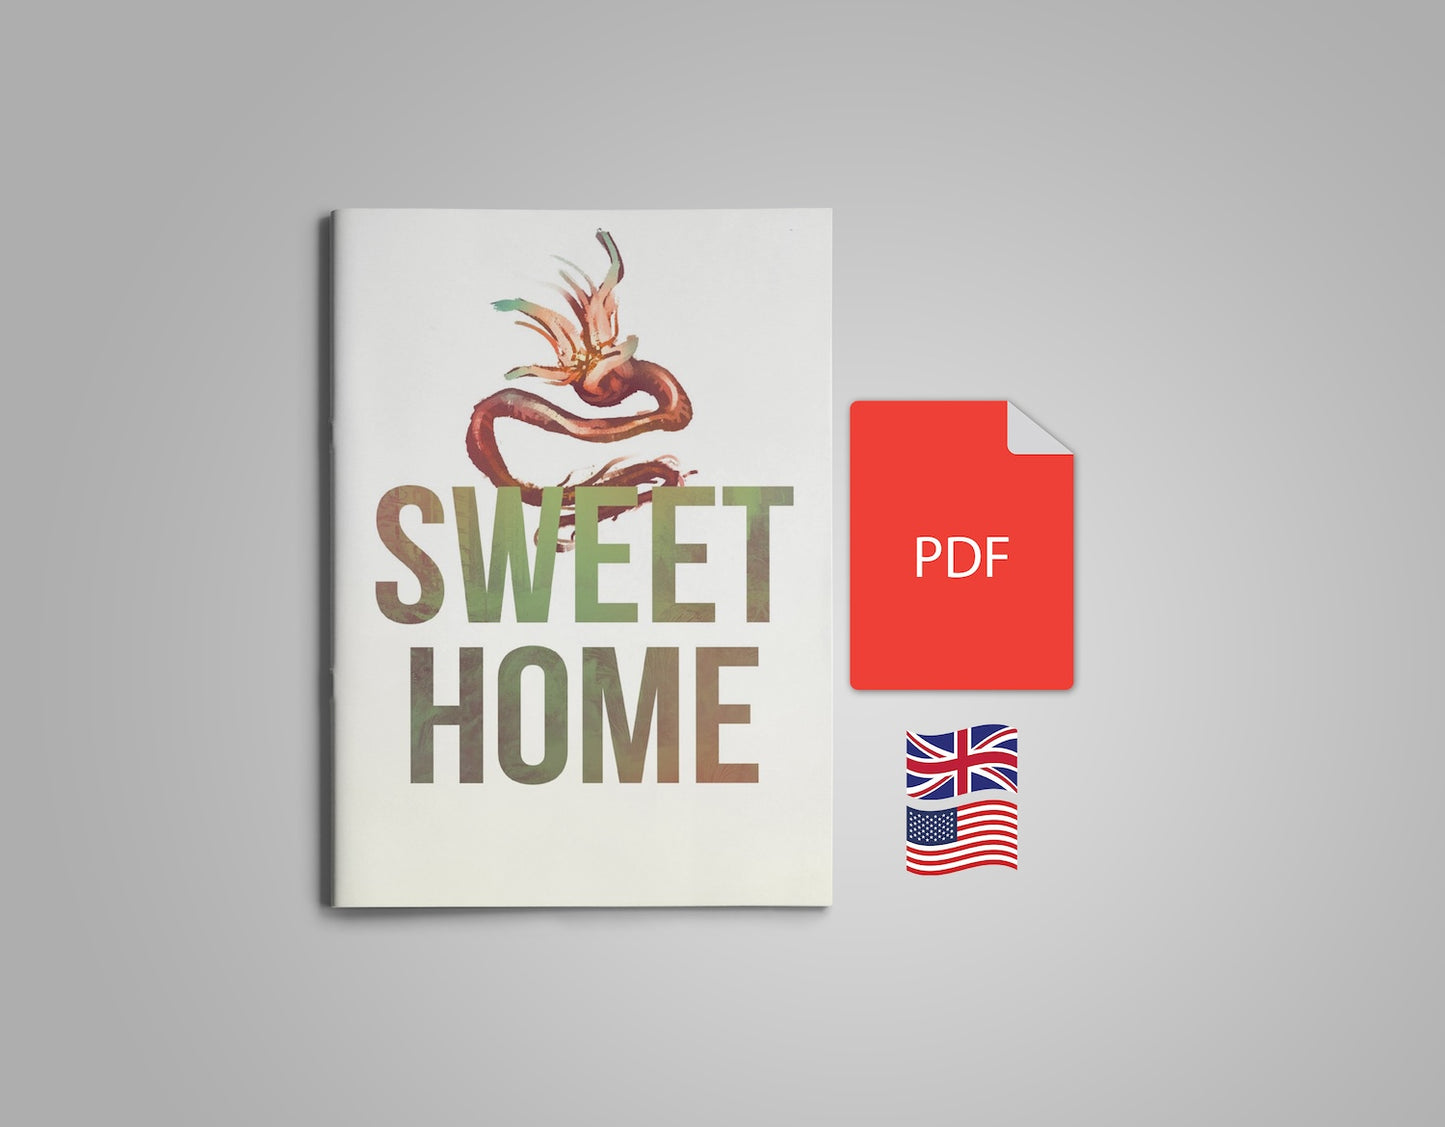 Sweet Home PDF 🇬🇧🇺🇸